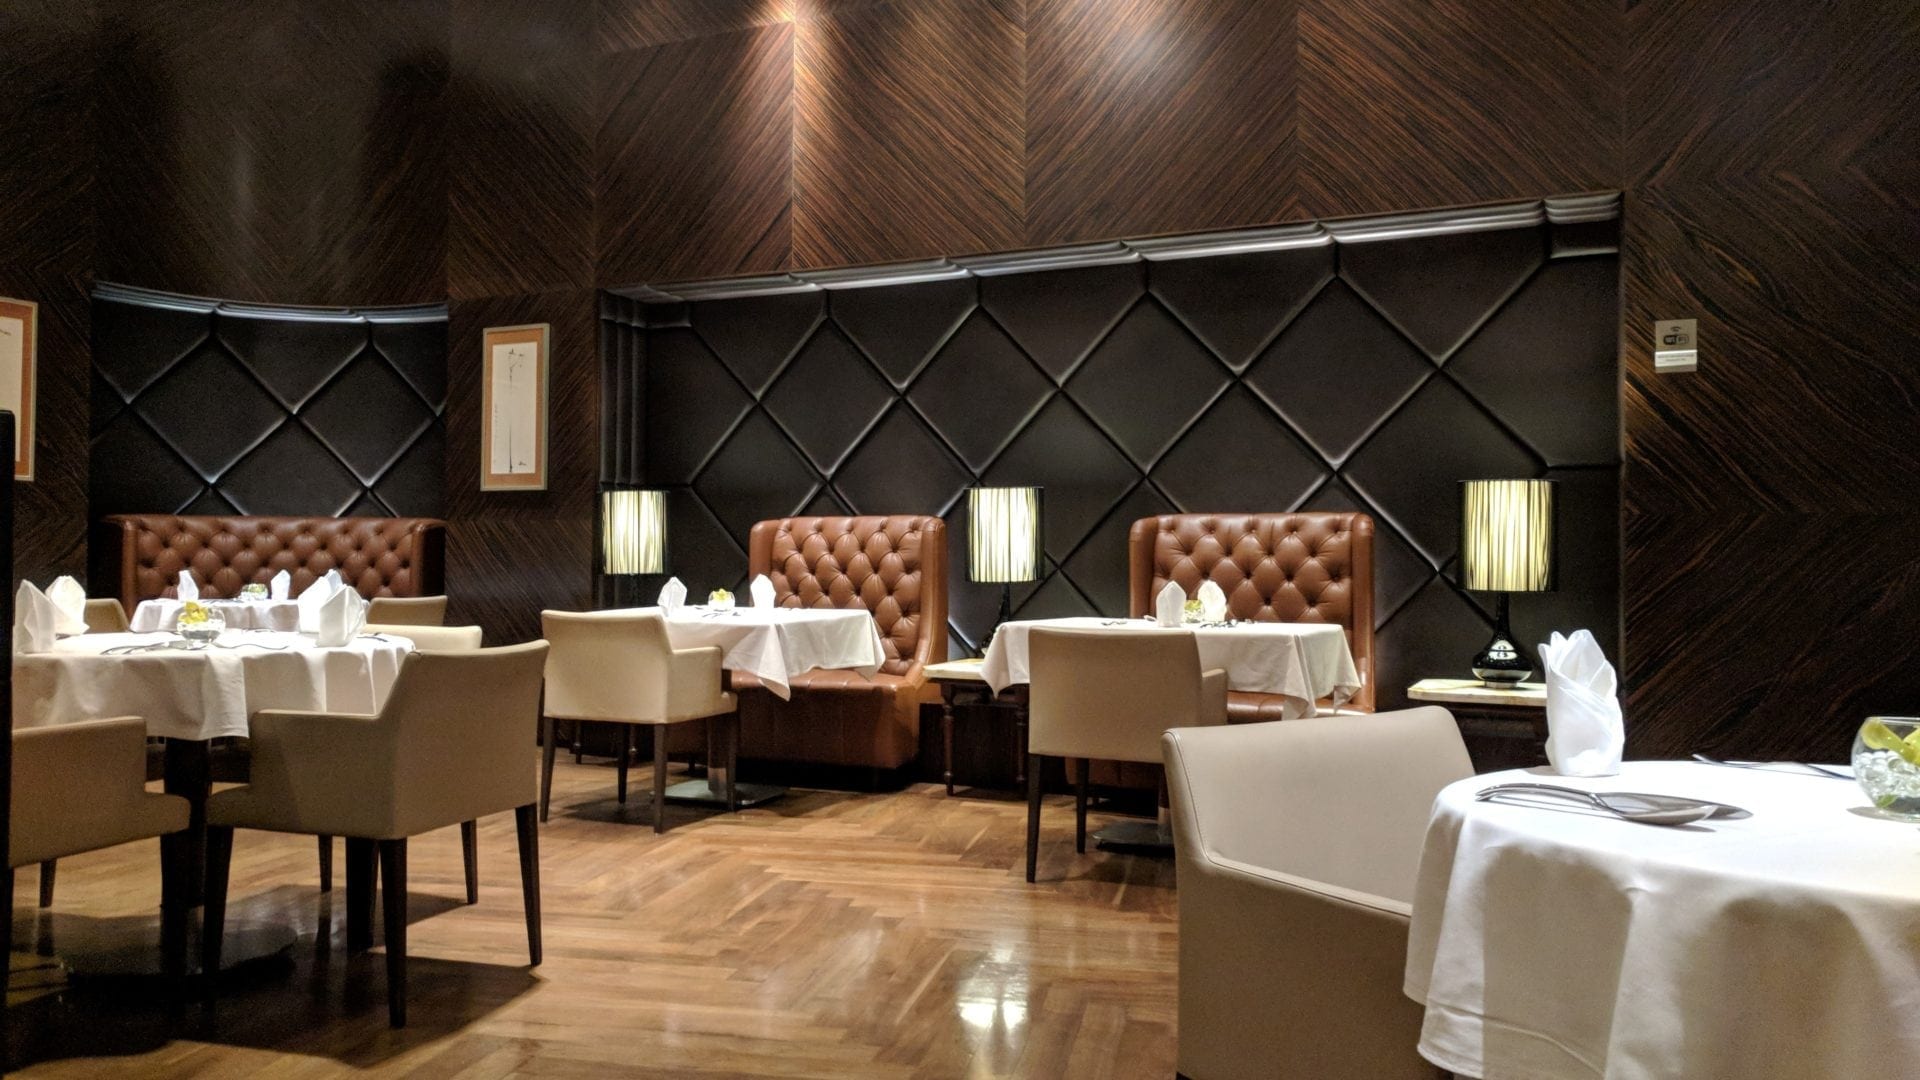 Singapore Airlines Private Room Restaurant